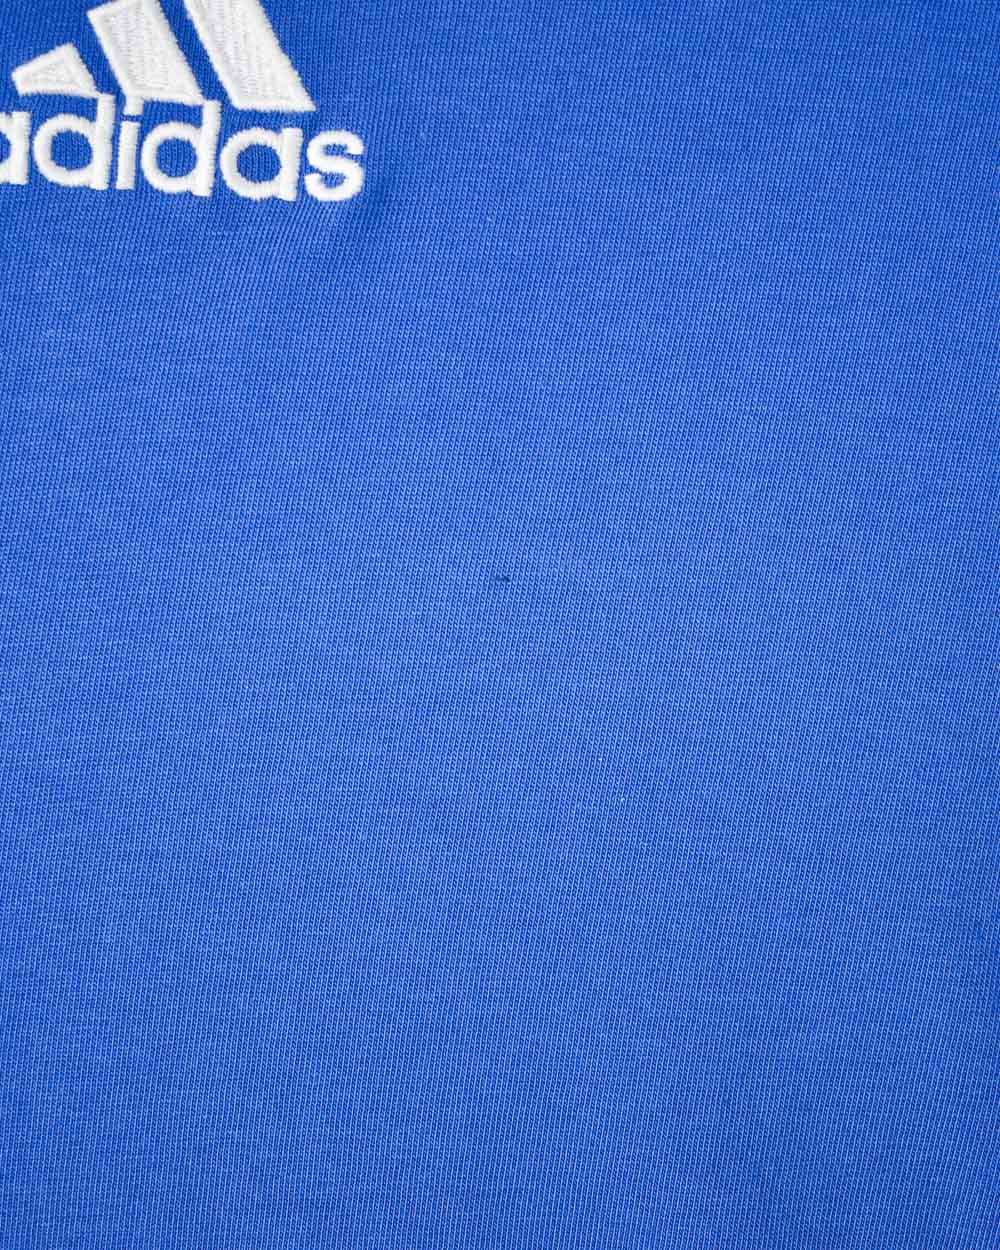 Blue Adidas T-Shirt - Small